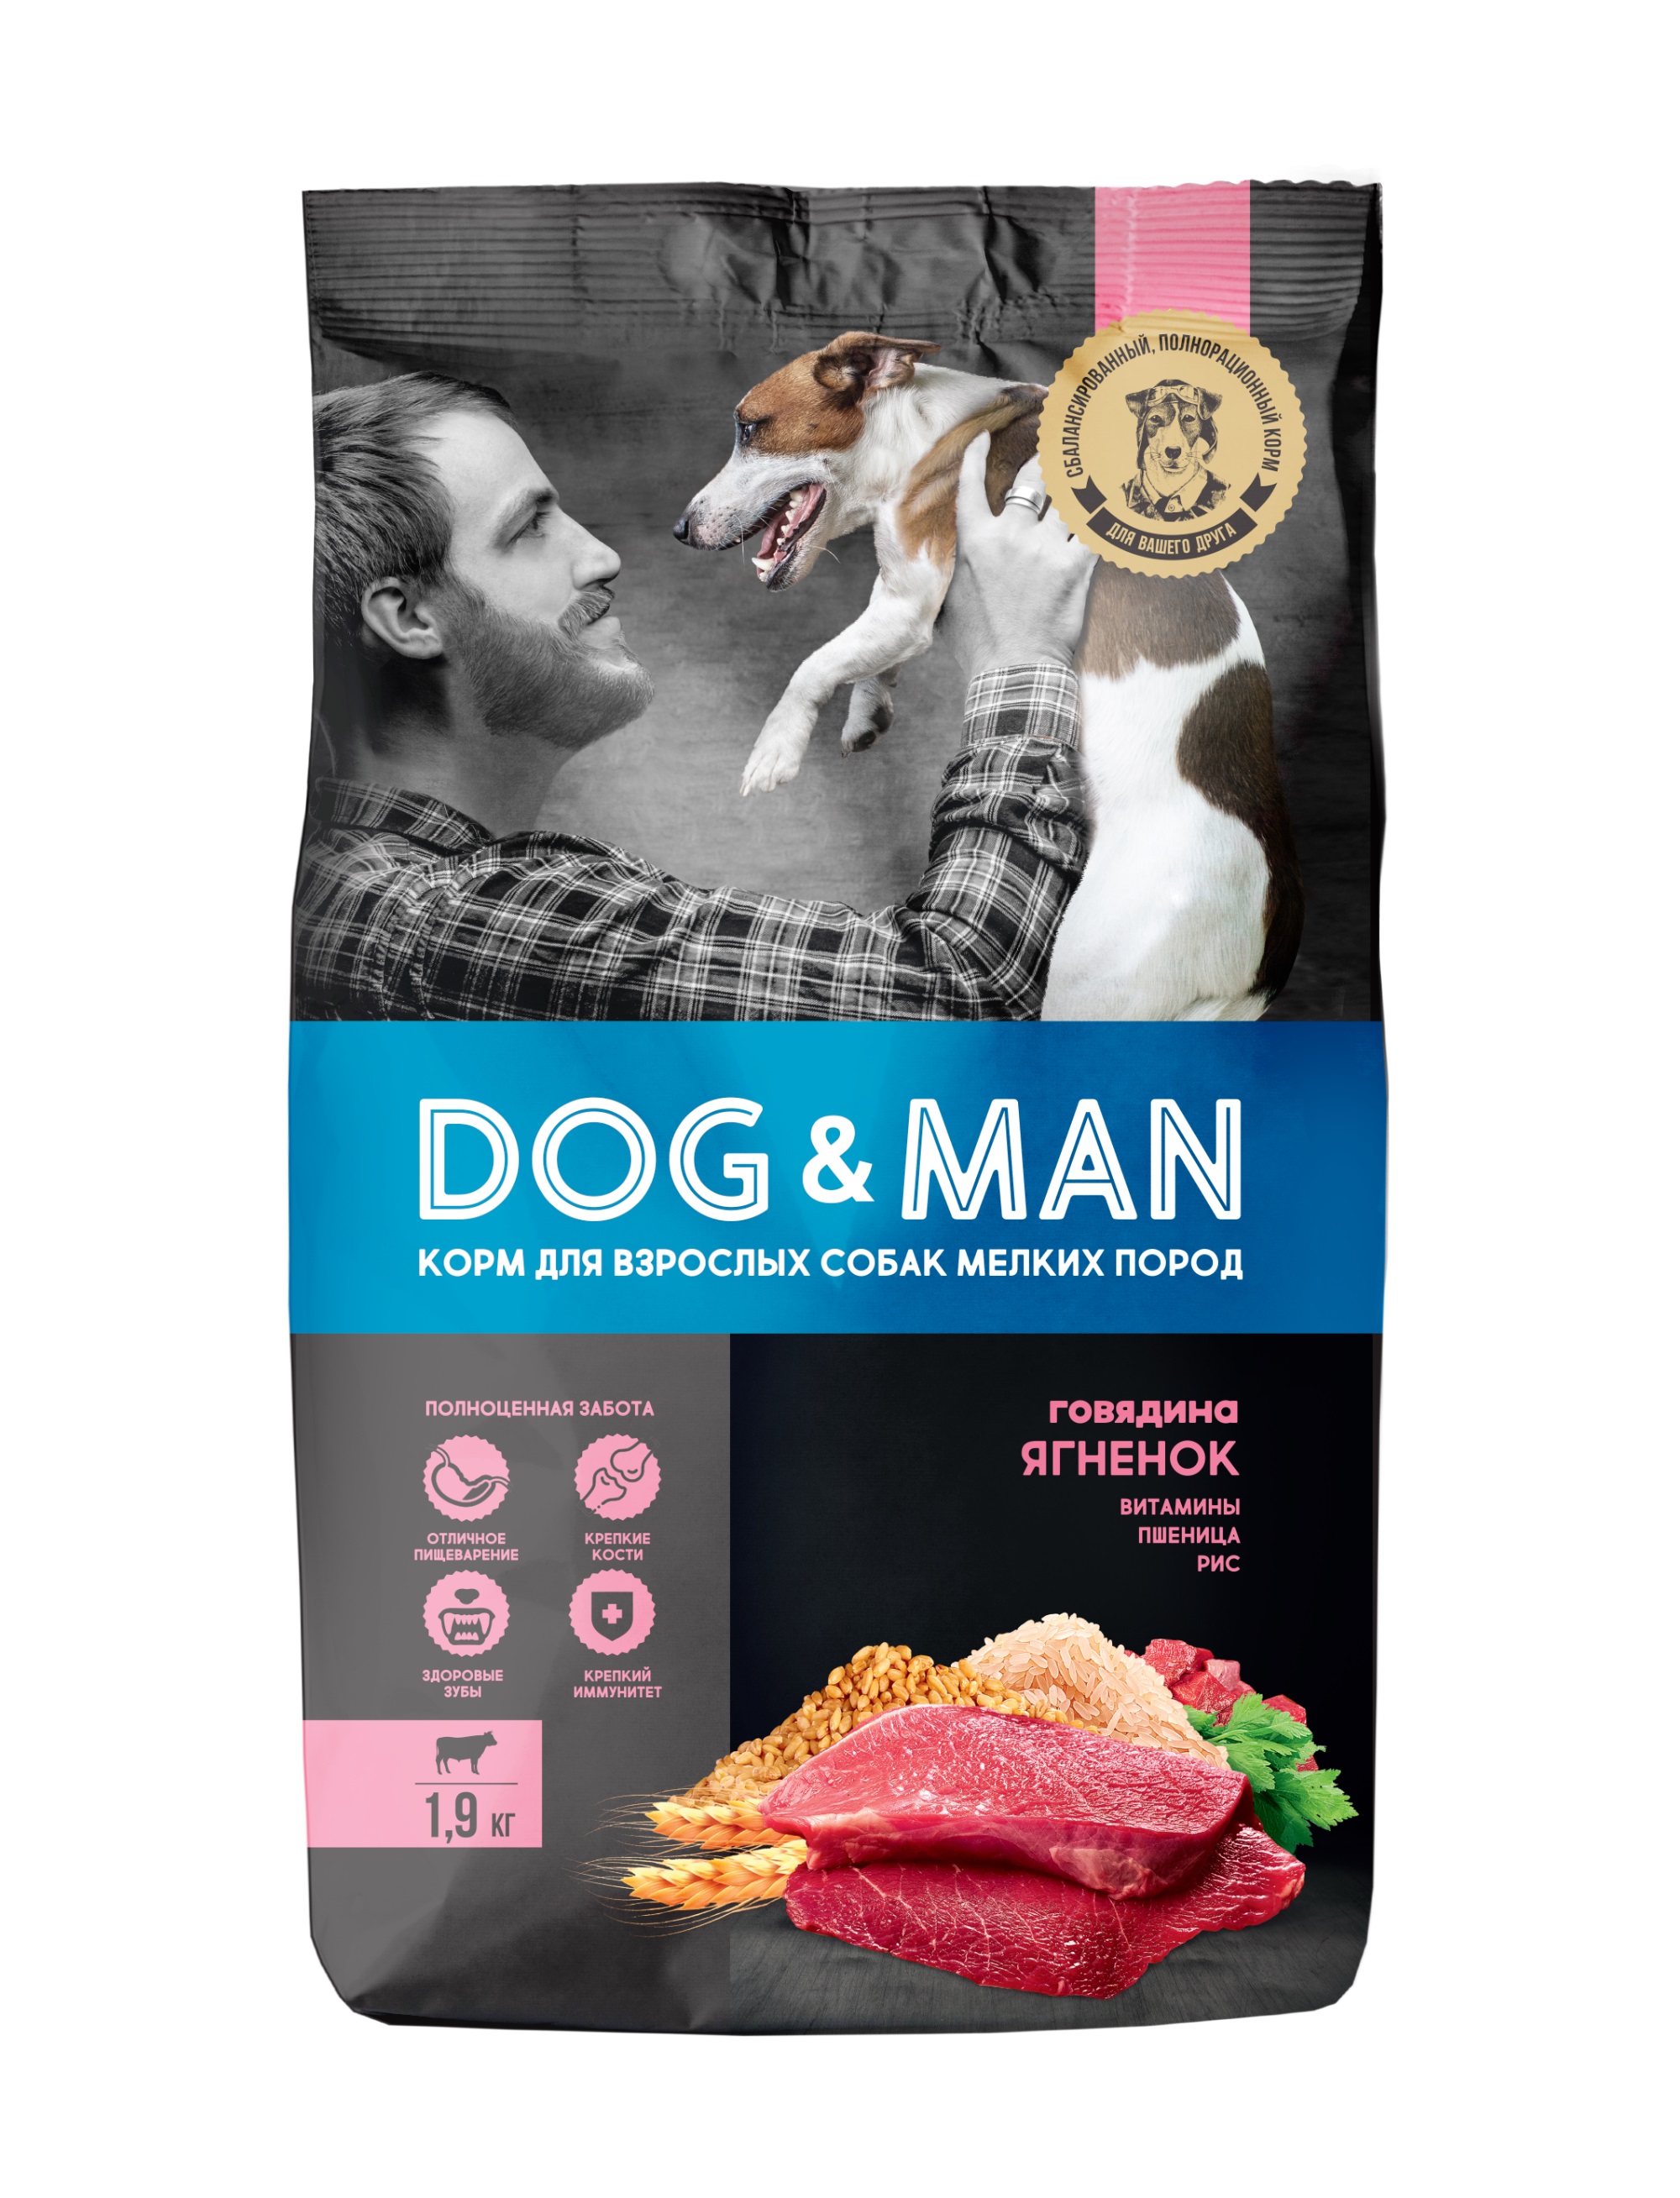 Сухой корм для собак Dog&Man, для мелких пород, говядина, ягненок, 1,9кг